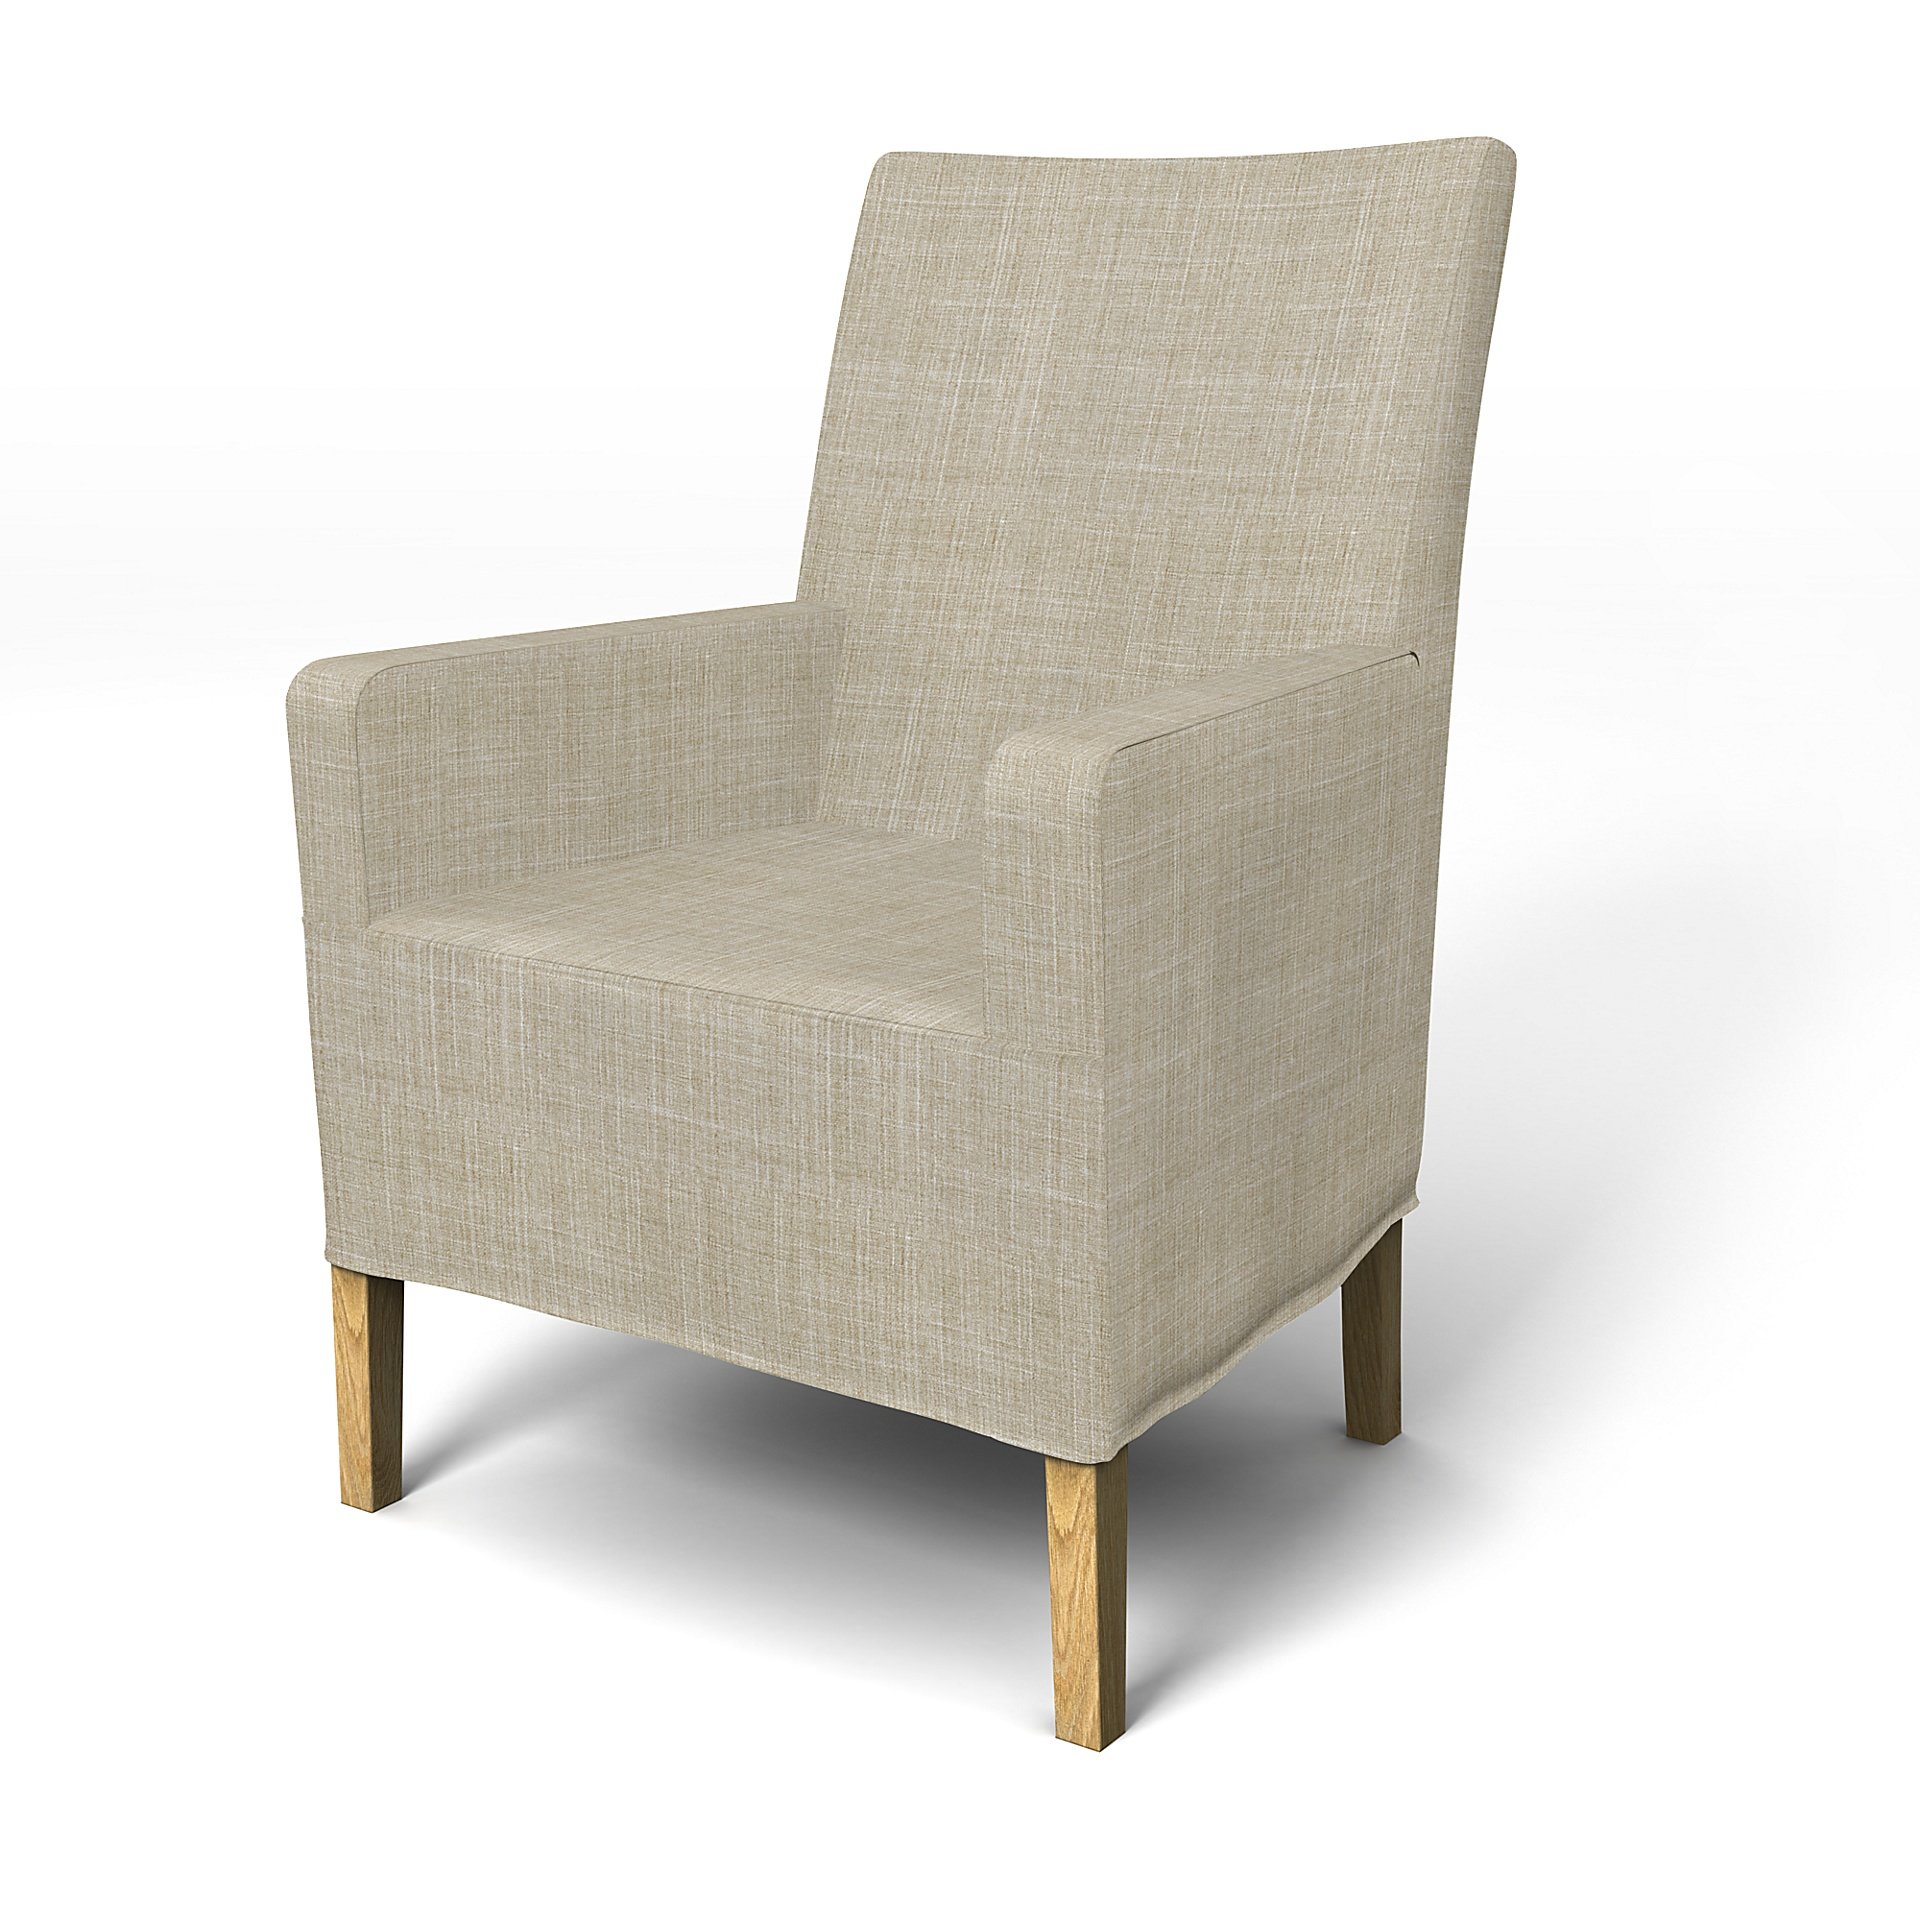 IKEA - Henriksdal, Chair cover w/ armrest, medium length skirt, Sand Beige, Boucle & Texture - Bemz